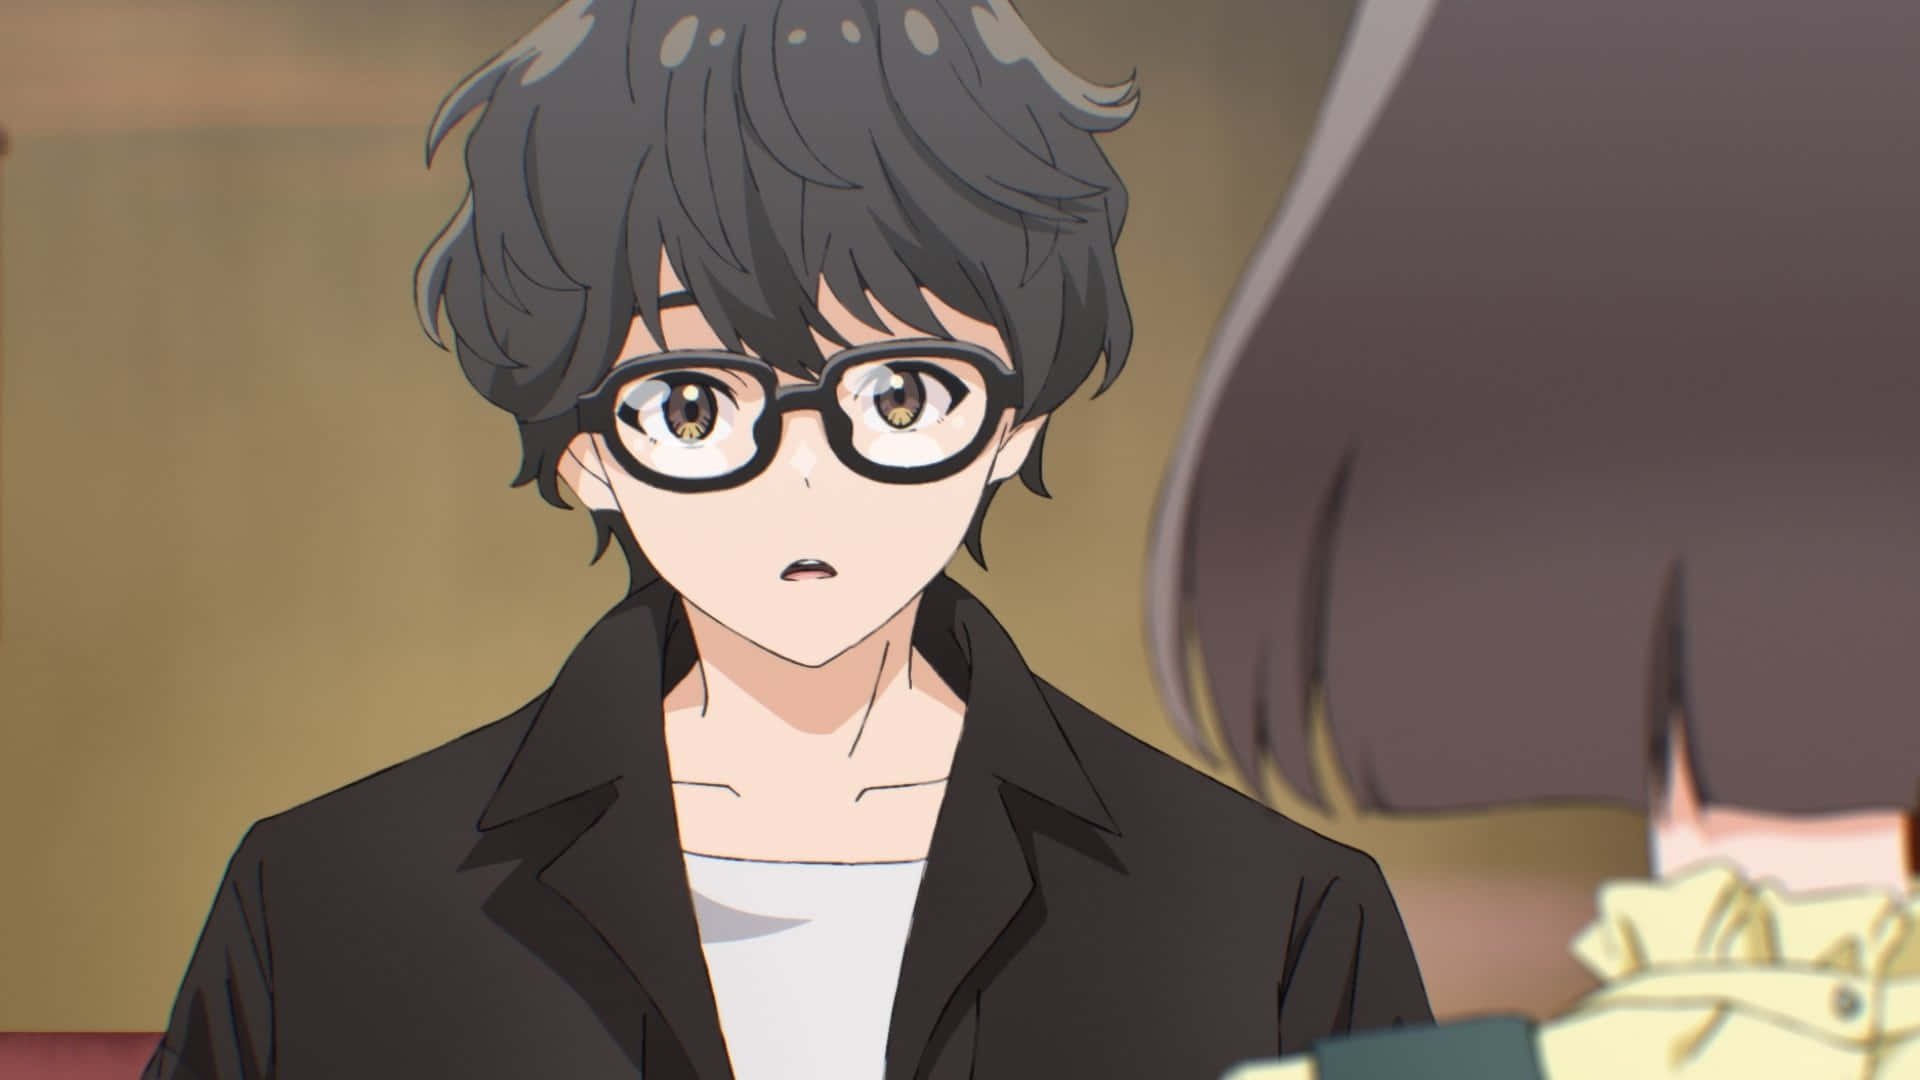 Anime Boy Black Hair Glasses Surprised Expression Wallpaper